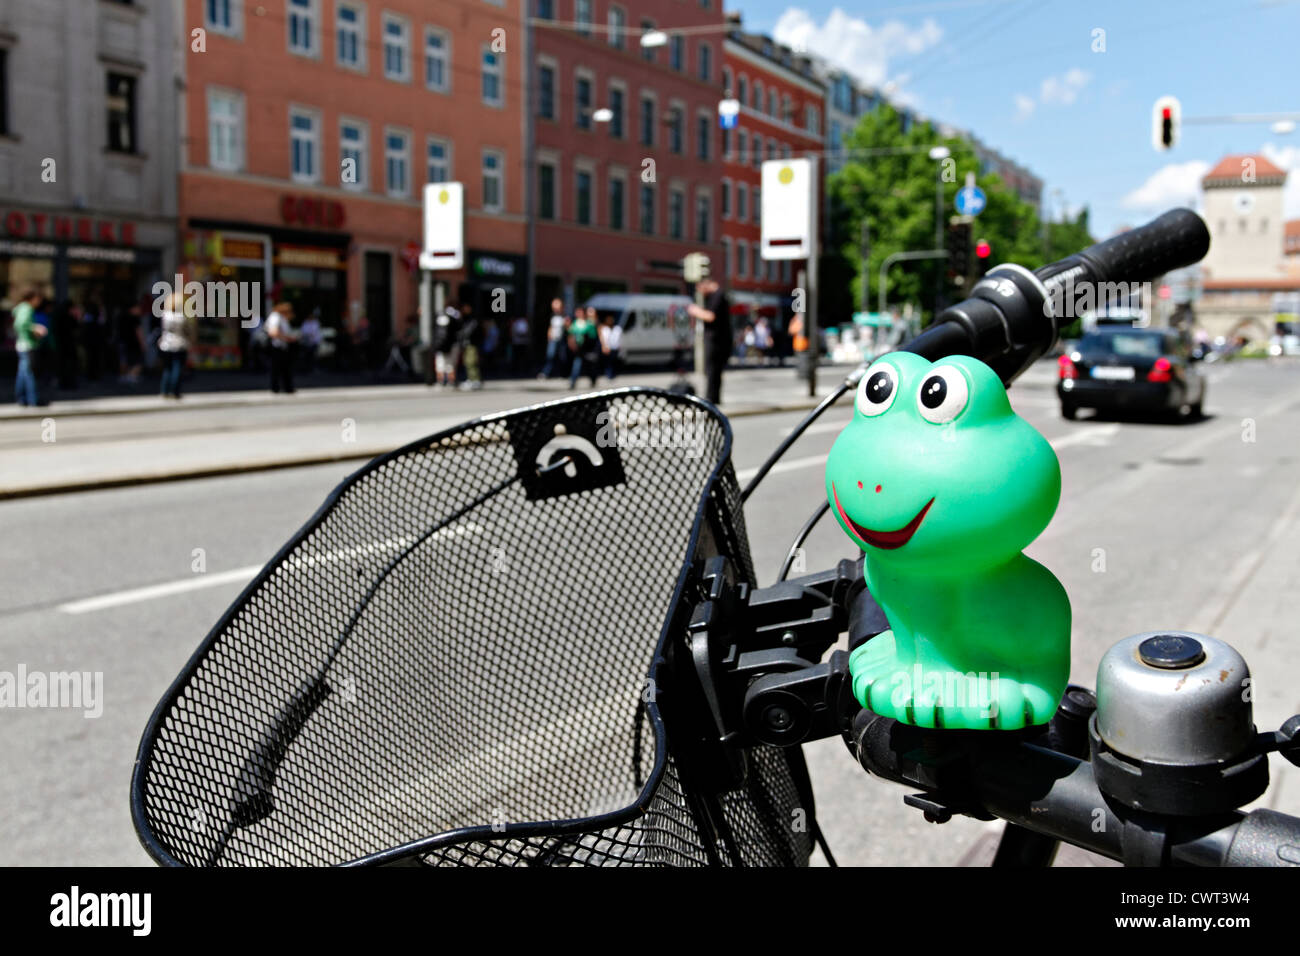 Green rubber mascot on bike handle bars, Munich Upper Bavaria Germany Stock Photo